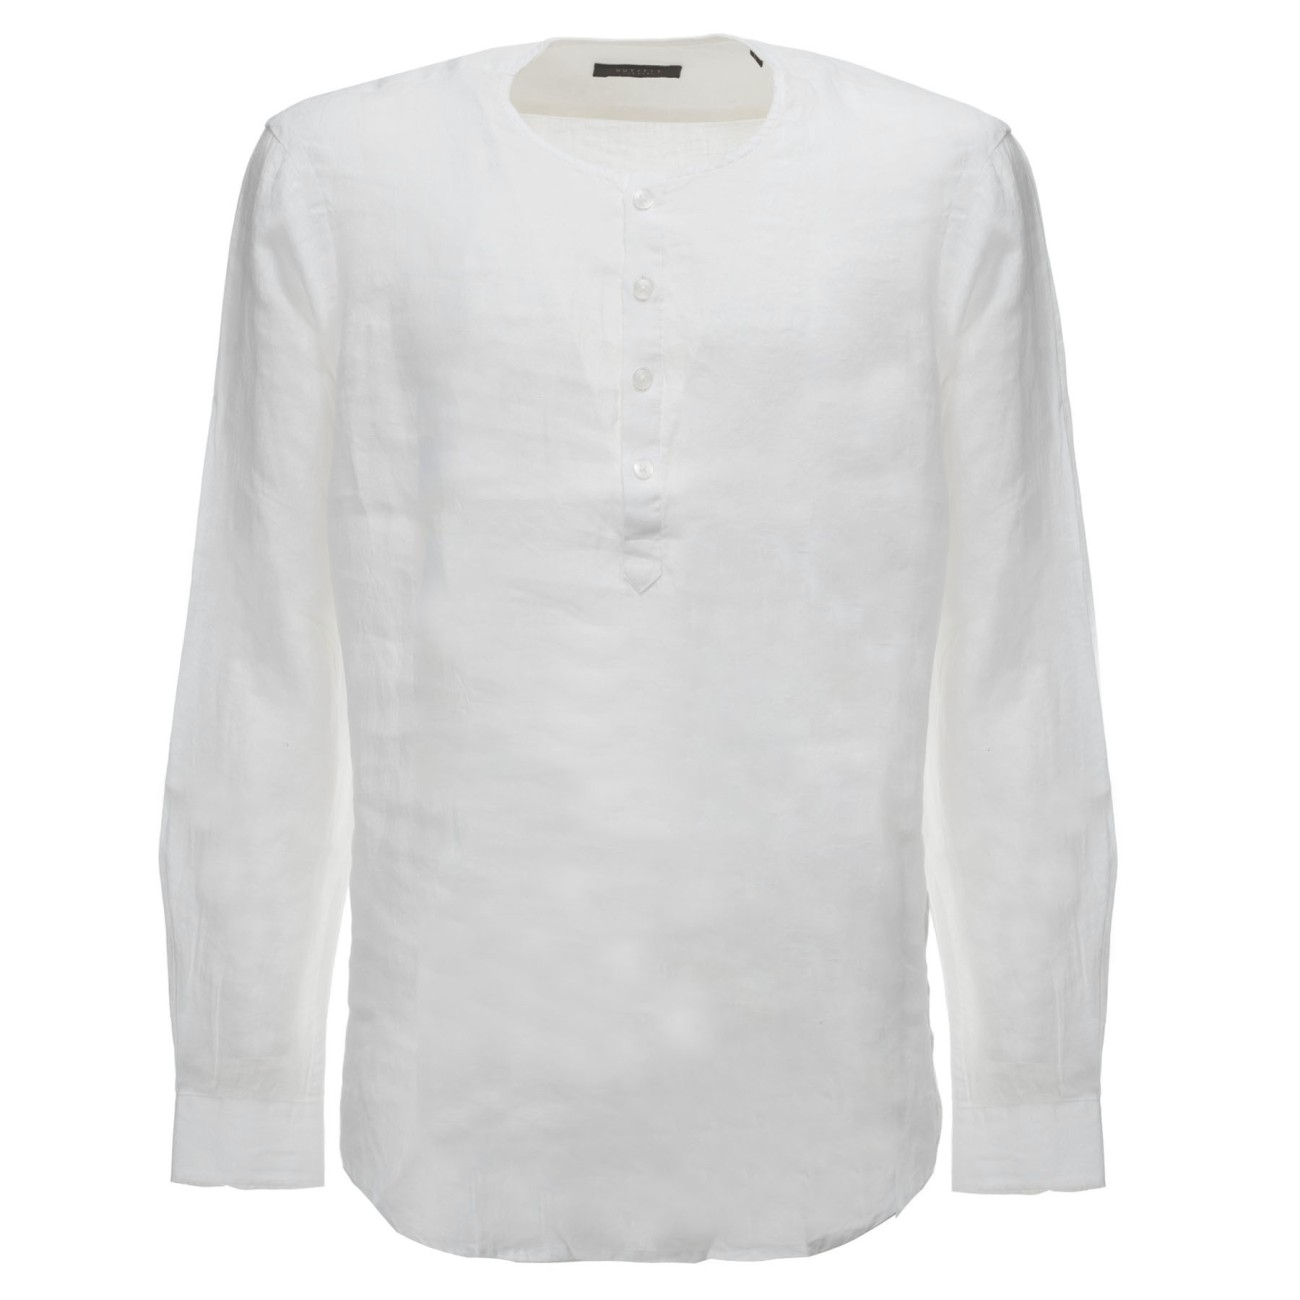 White linen seraph outfit